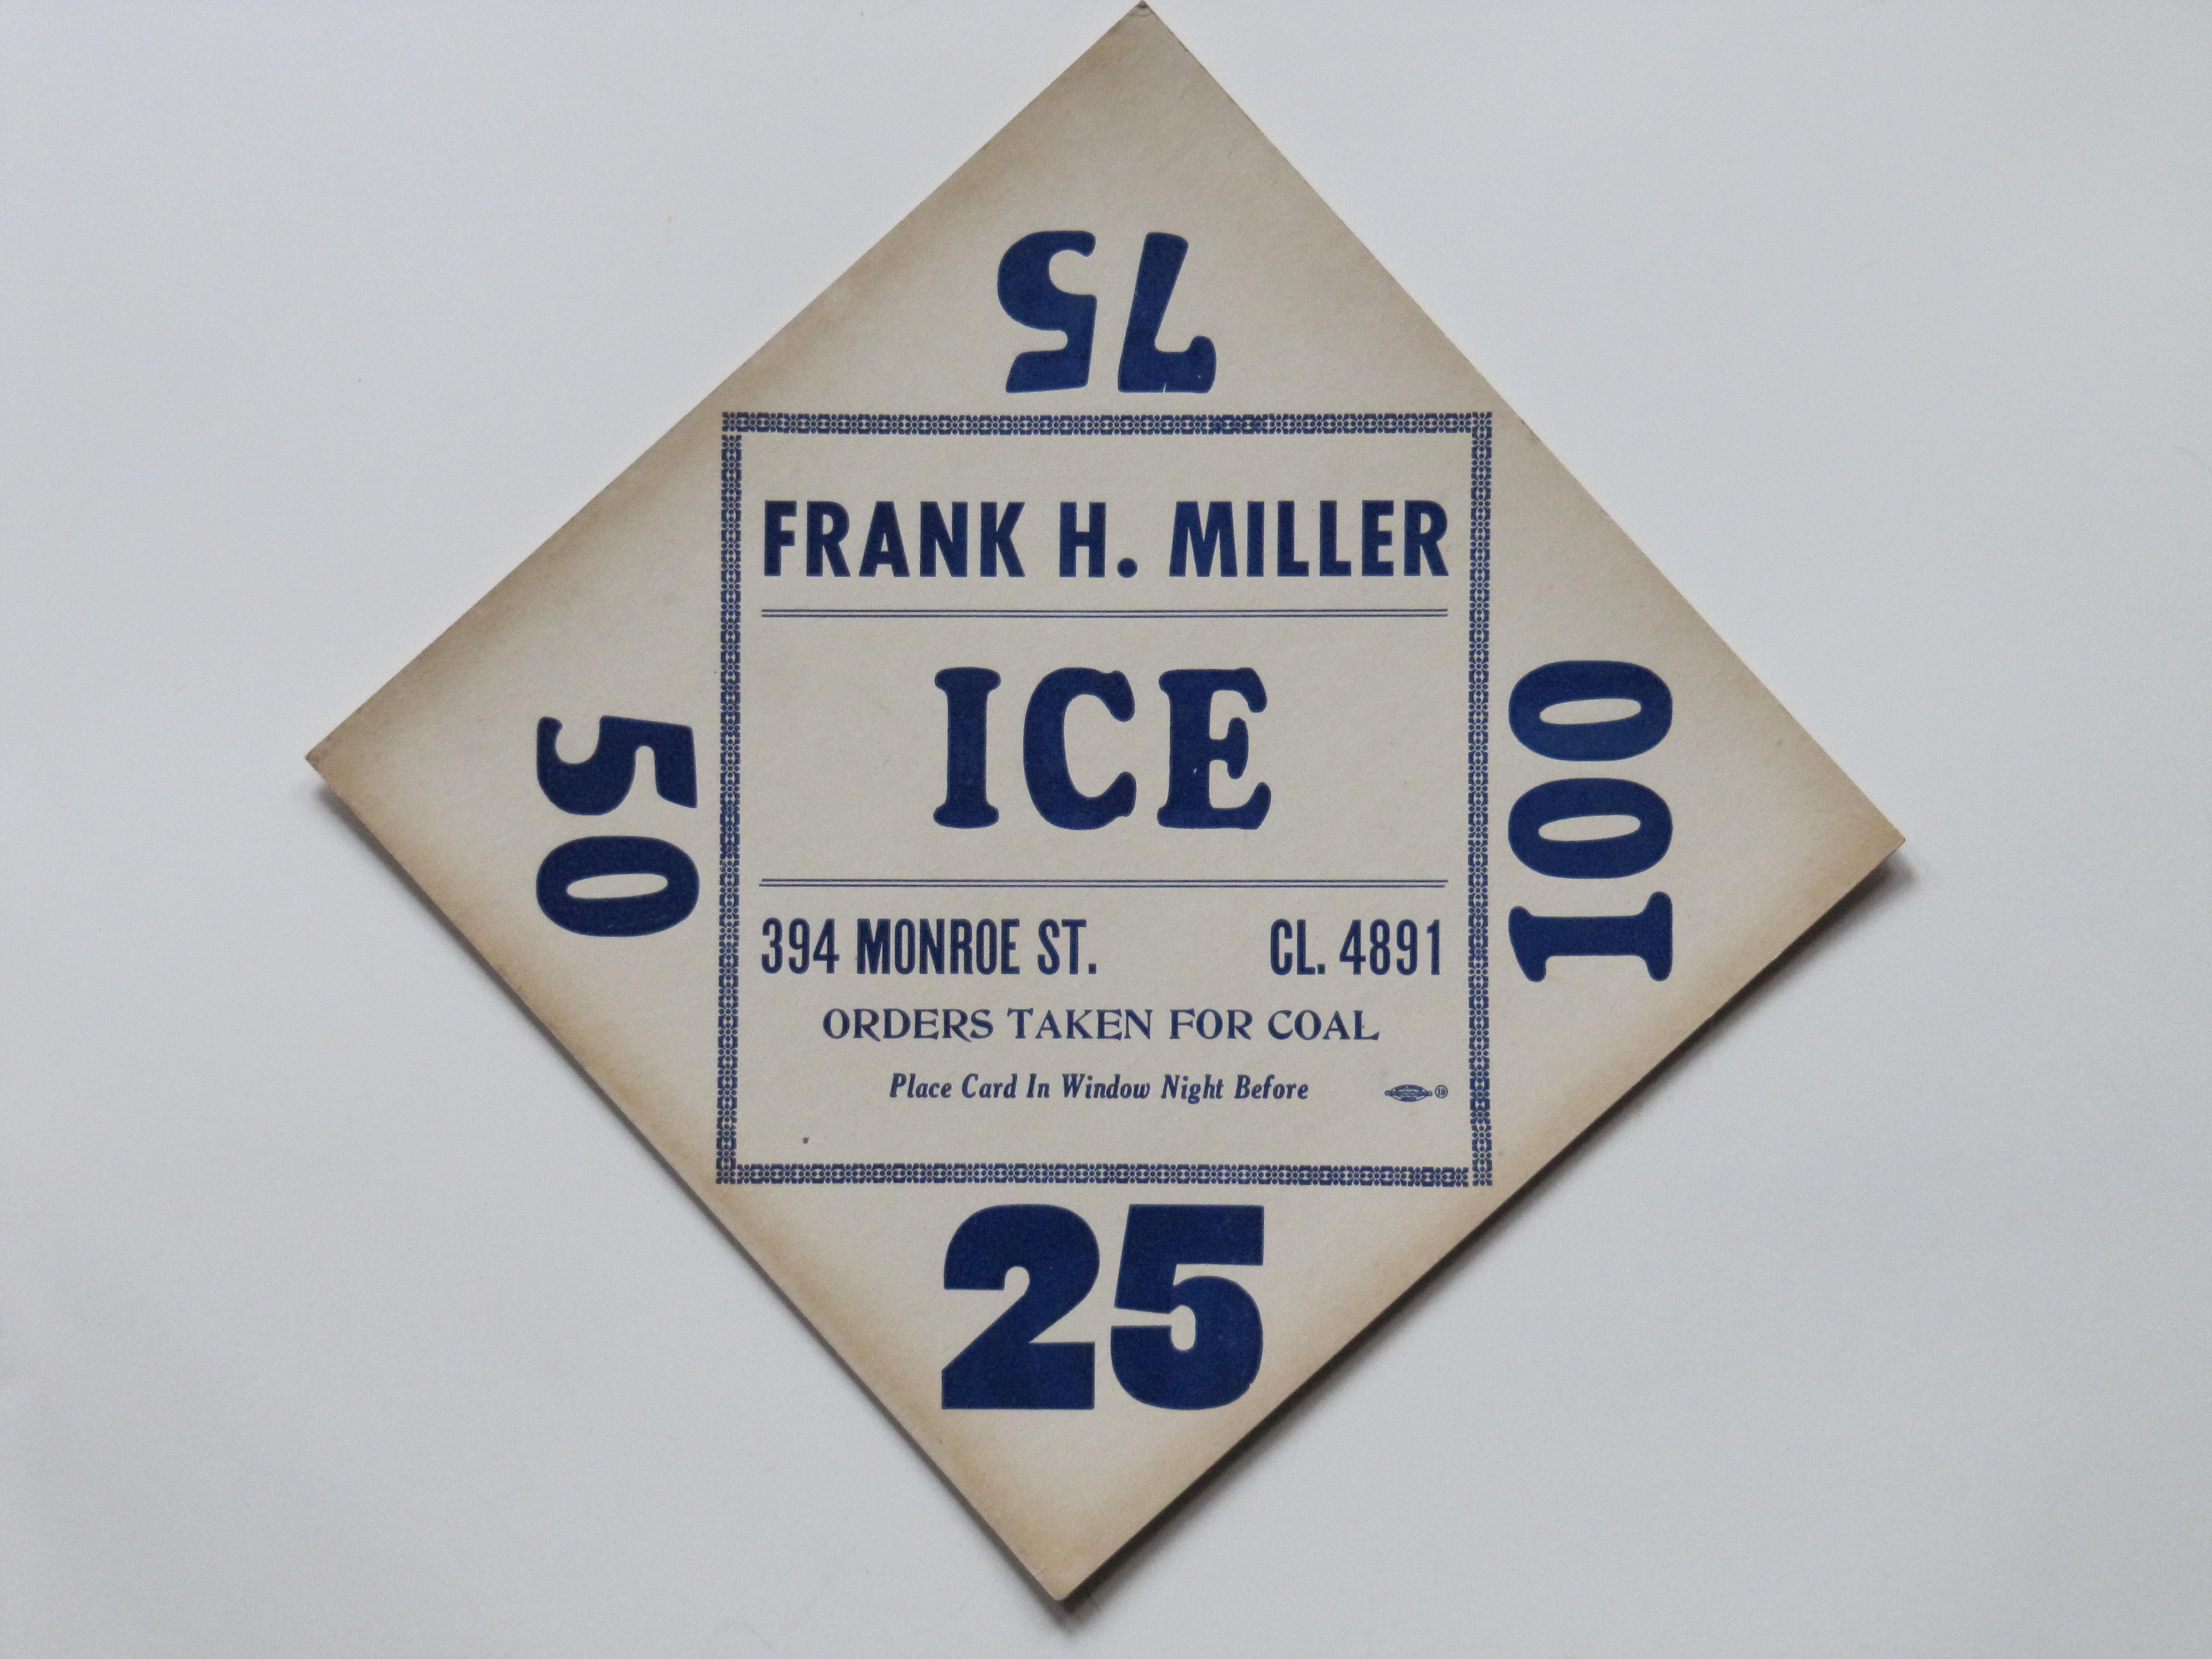 Frank H. Miller Ice